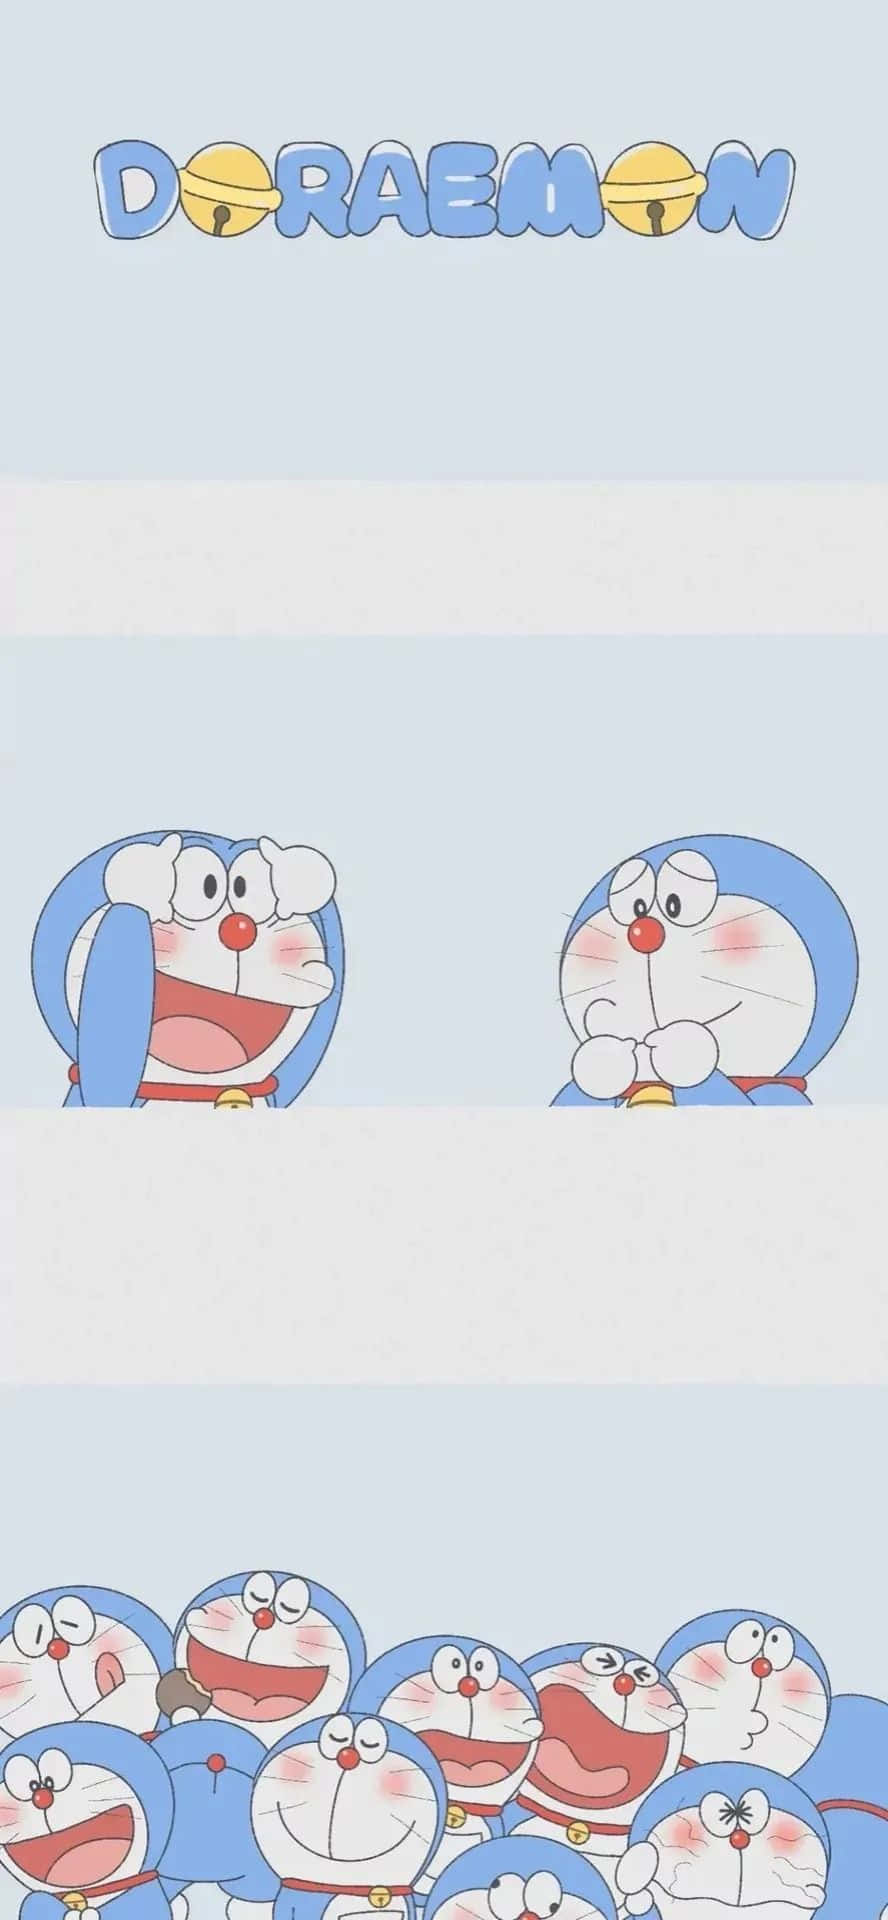 The beloved blue robotic cat, Doraemon, was always ready to help.